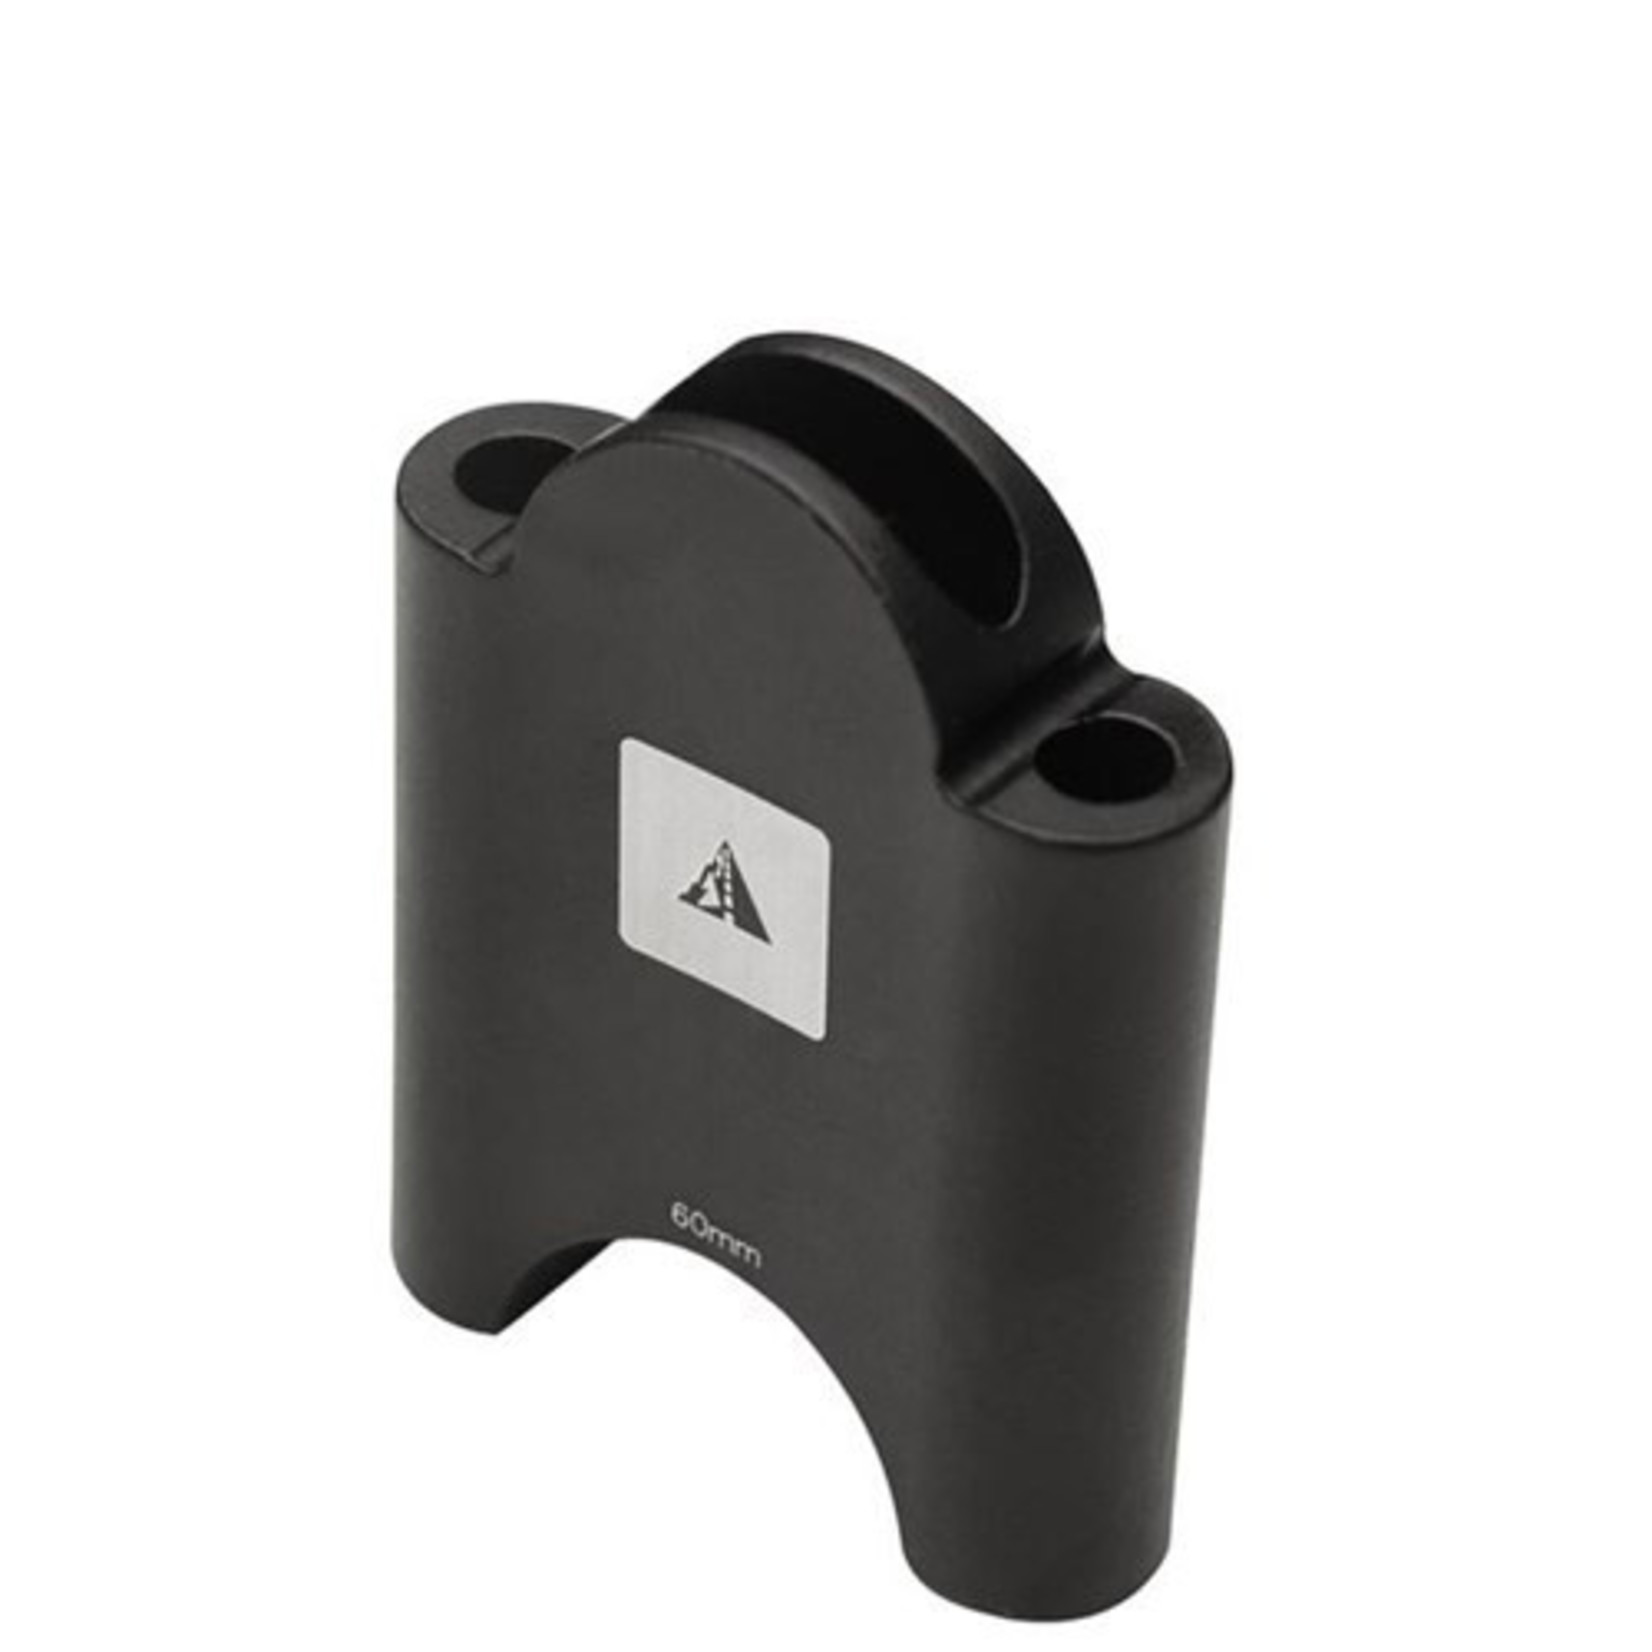 Profile Profile Design Aerobar Bracket Riser Kit - 60mm Clamp Diameter: 31.8mm